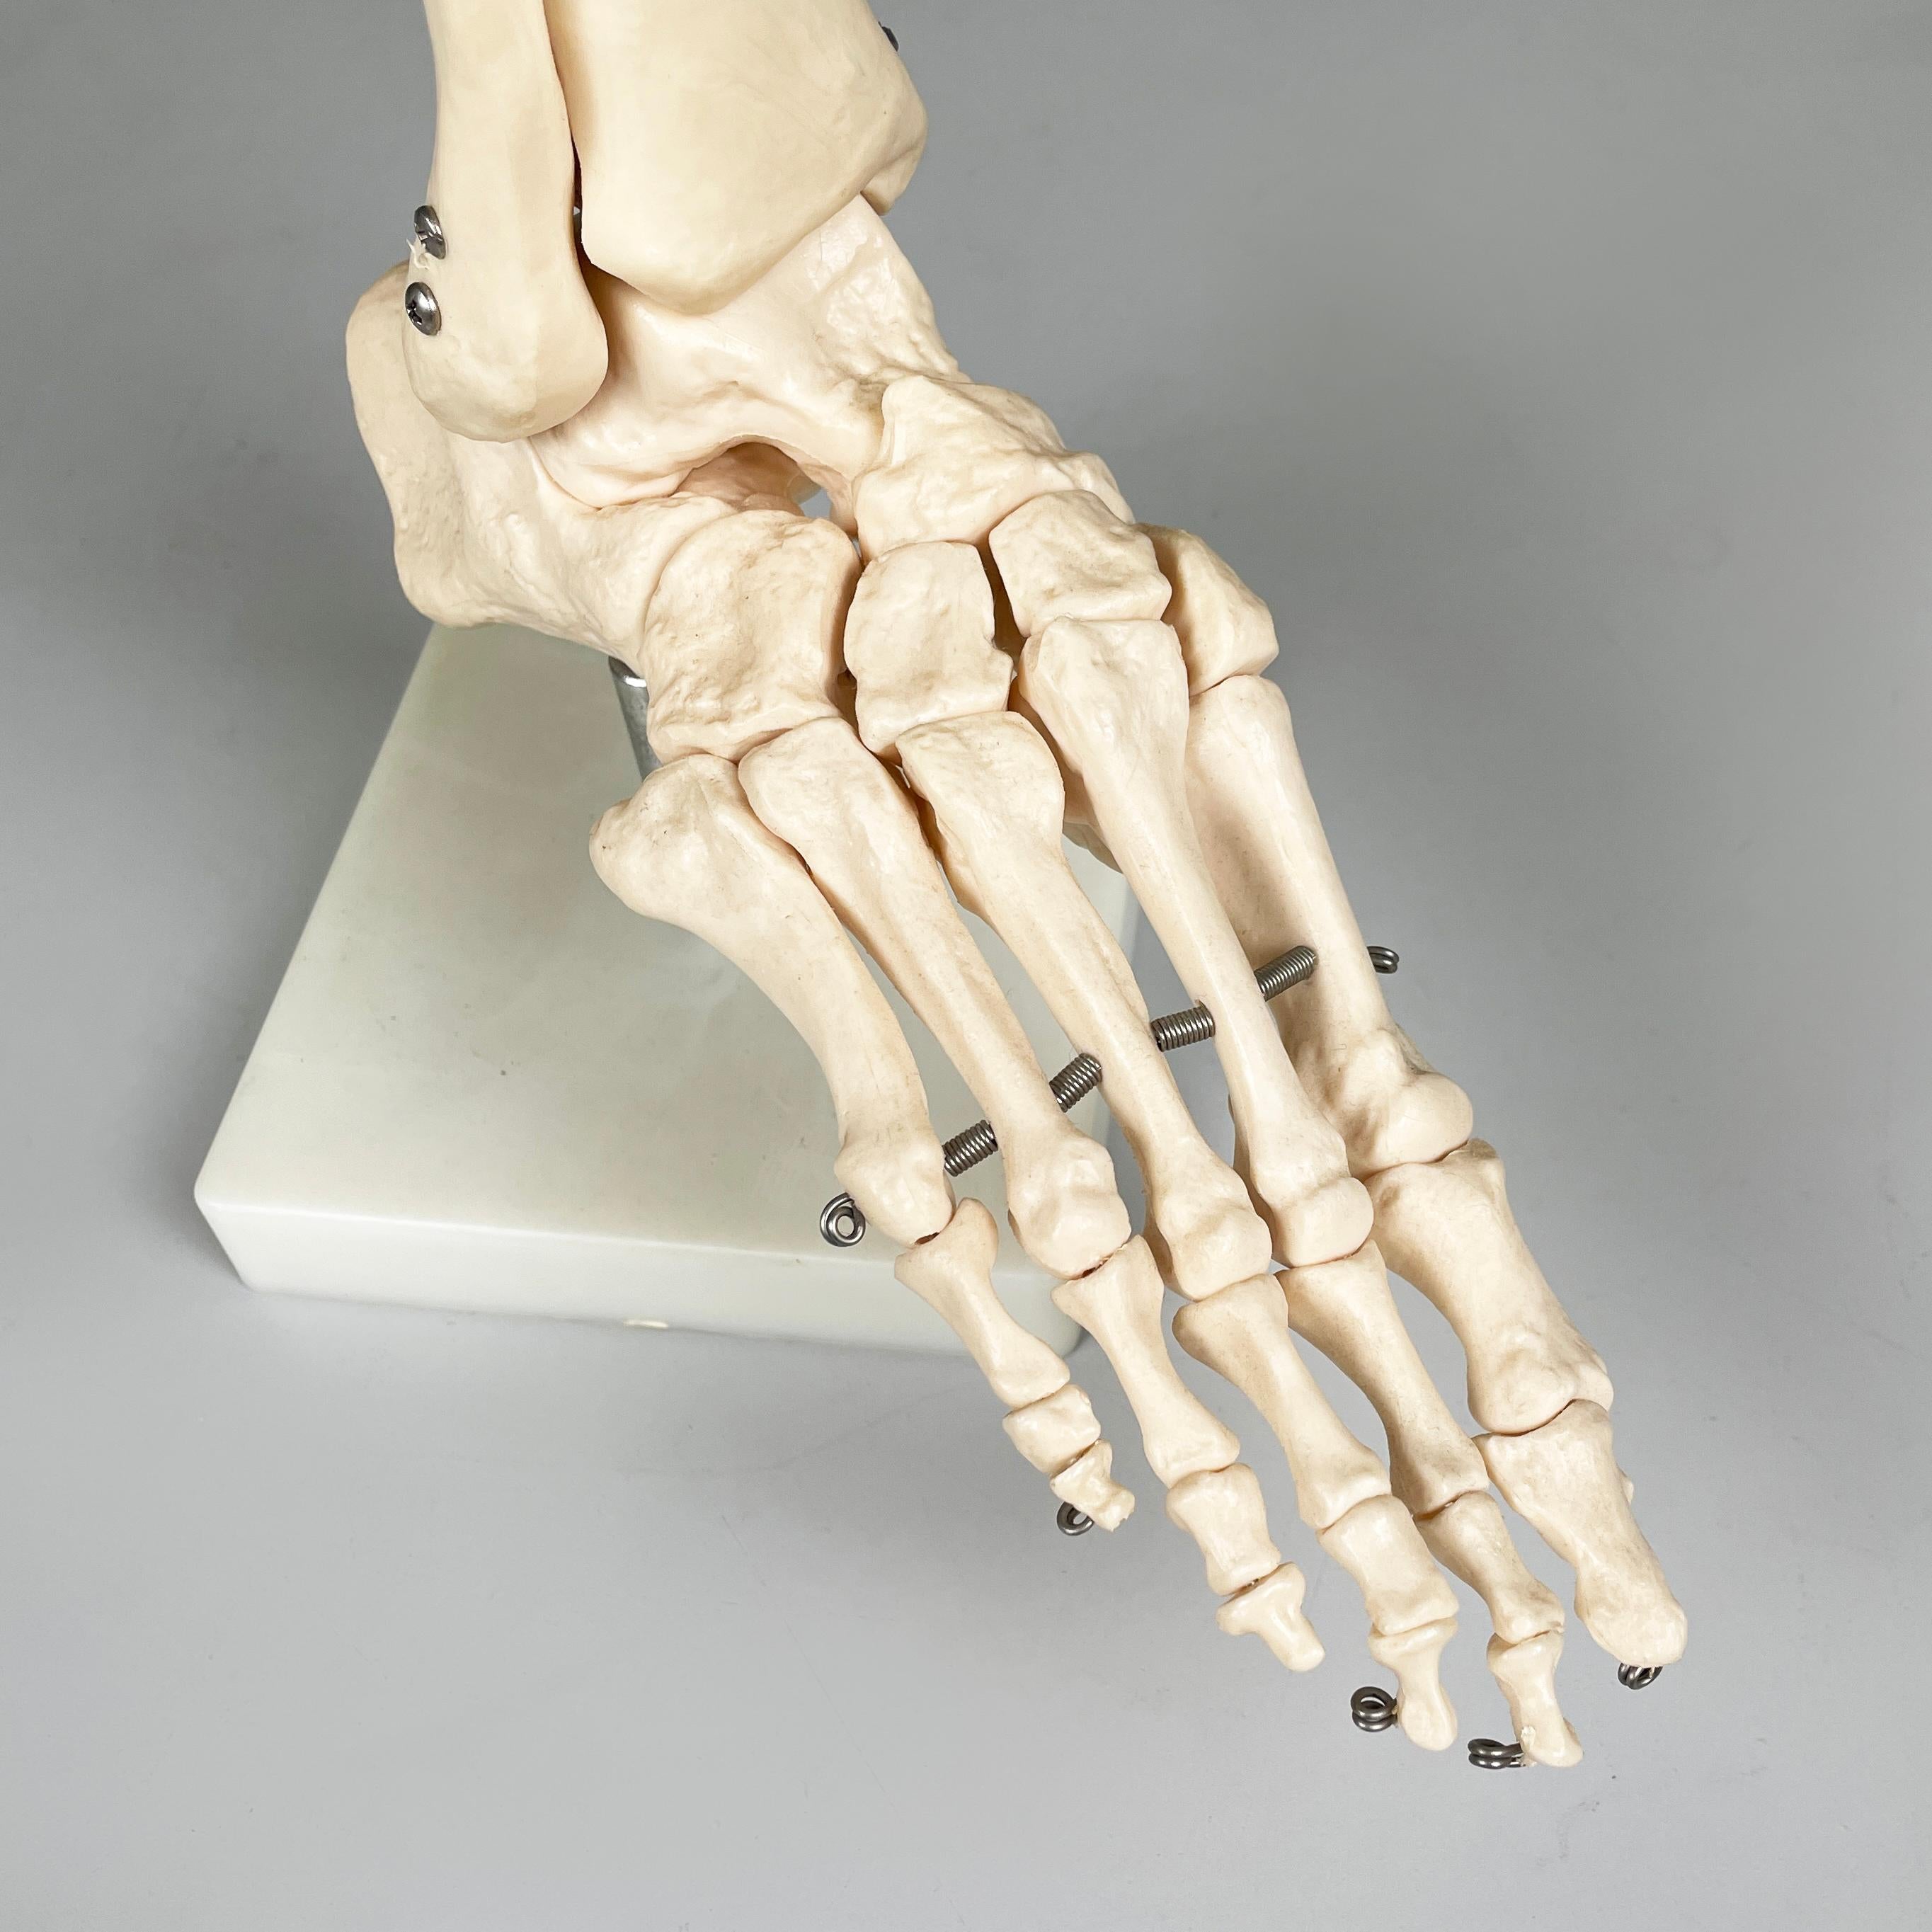 Italian modern Scientific anatomical model of the foot bones in plastic, 2000s For Sale 1